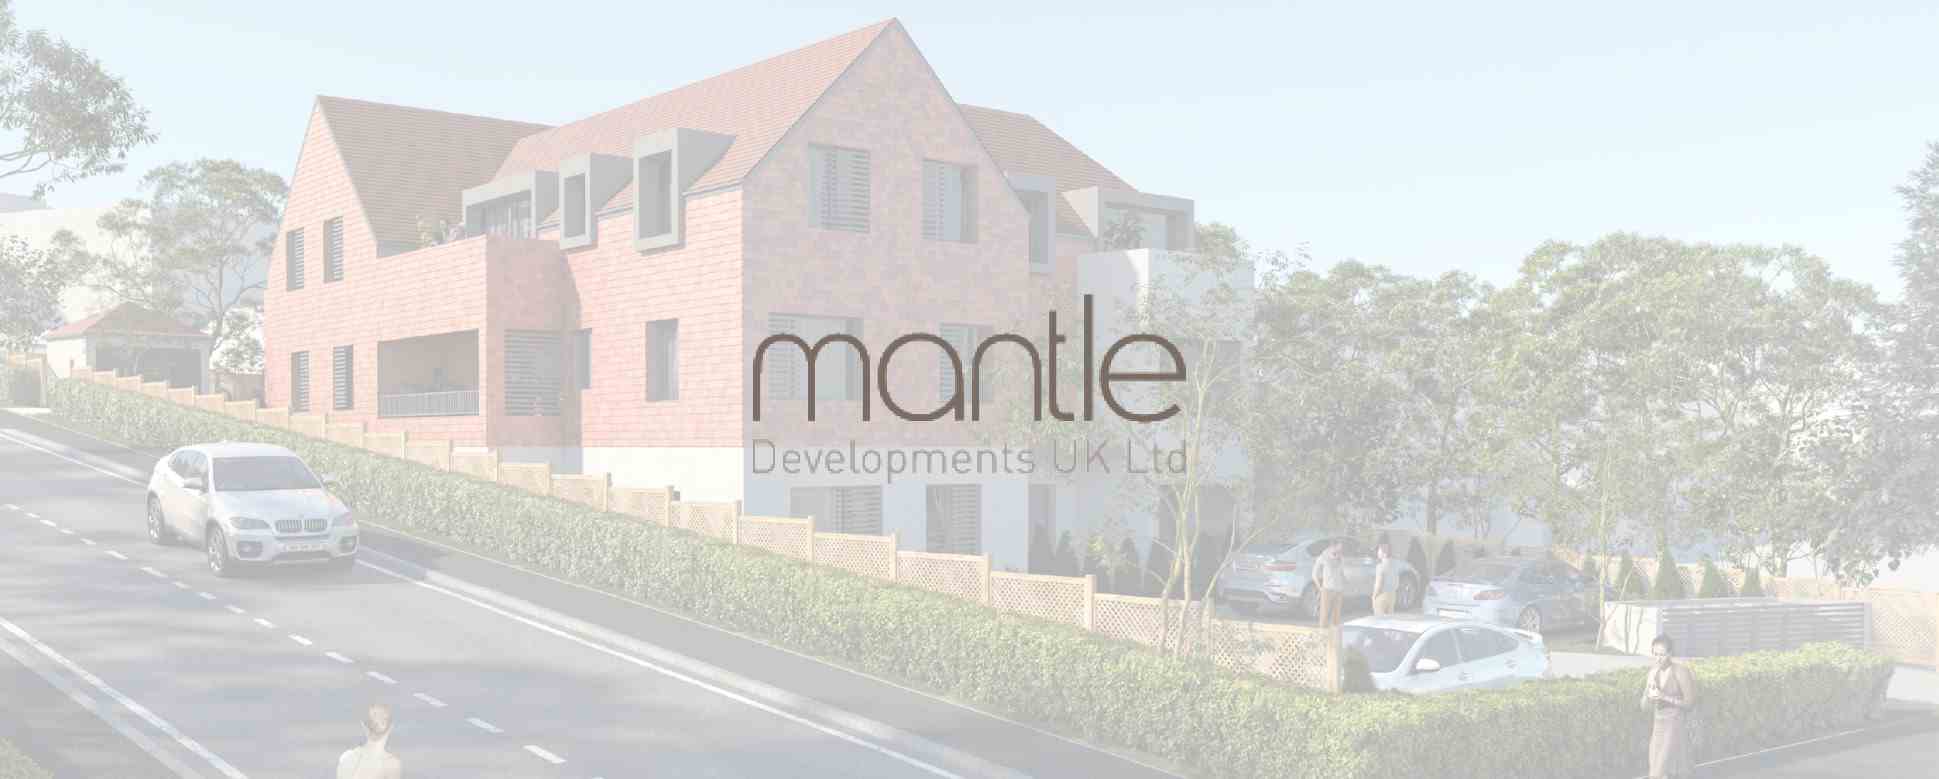 Meet the Developer – Mantle Developments